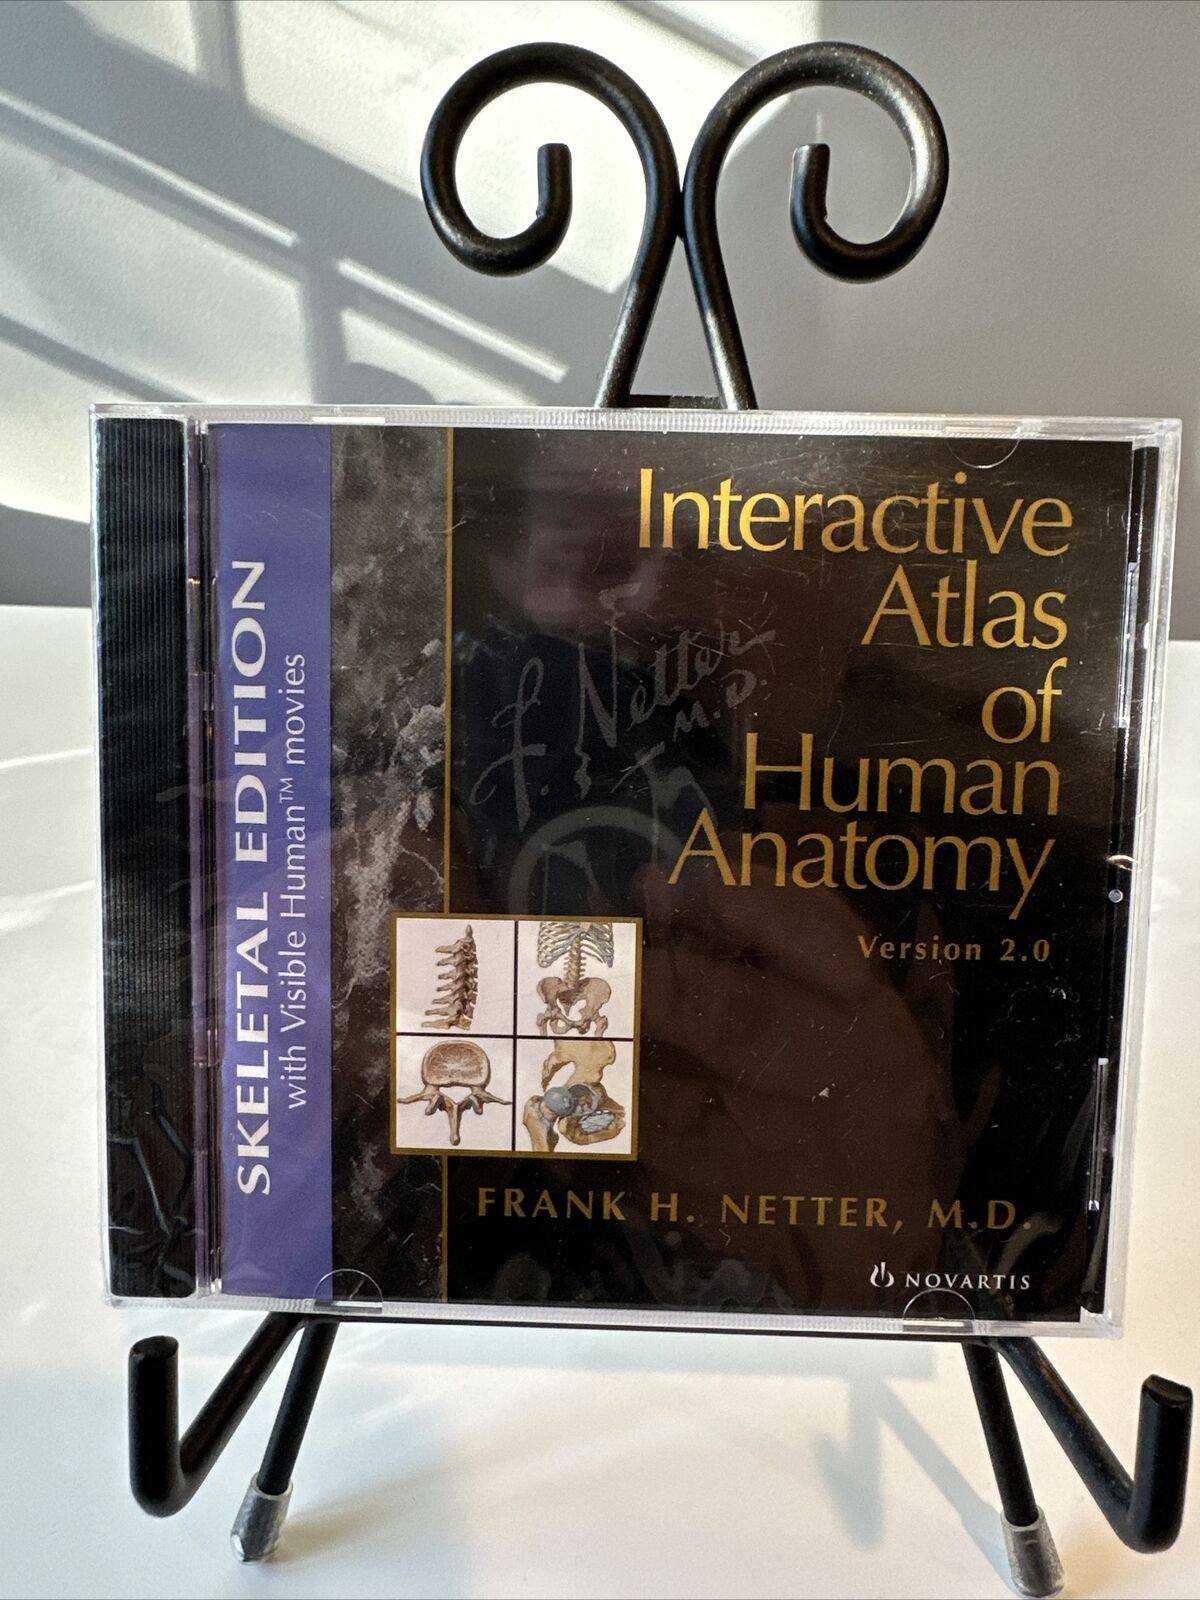 INTERACTIVE ATLAS OF HUMAN ANATOMY: Cardio EDITION PC CD-ROM VER.2.0, FRANK N.